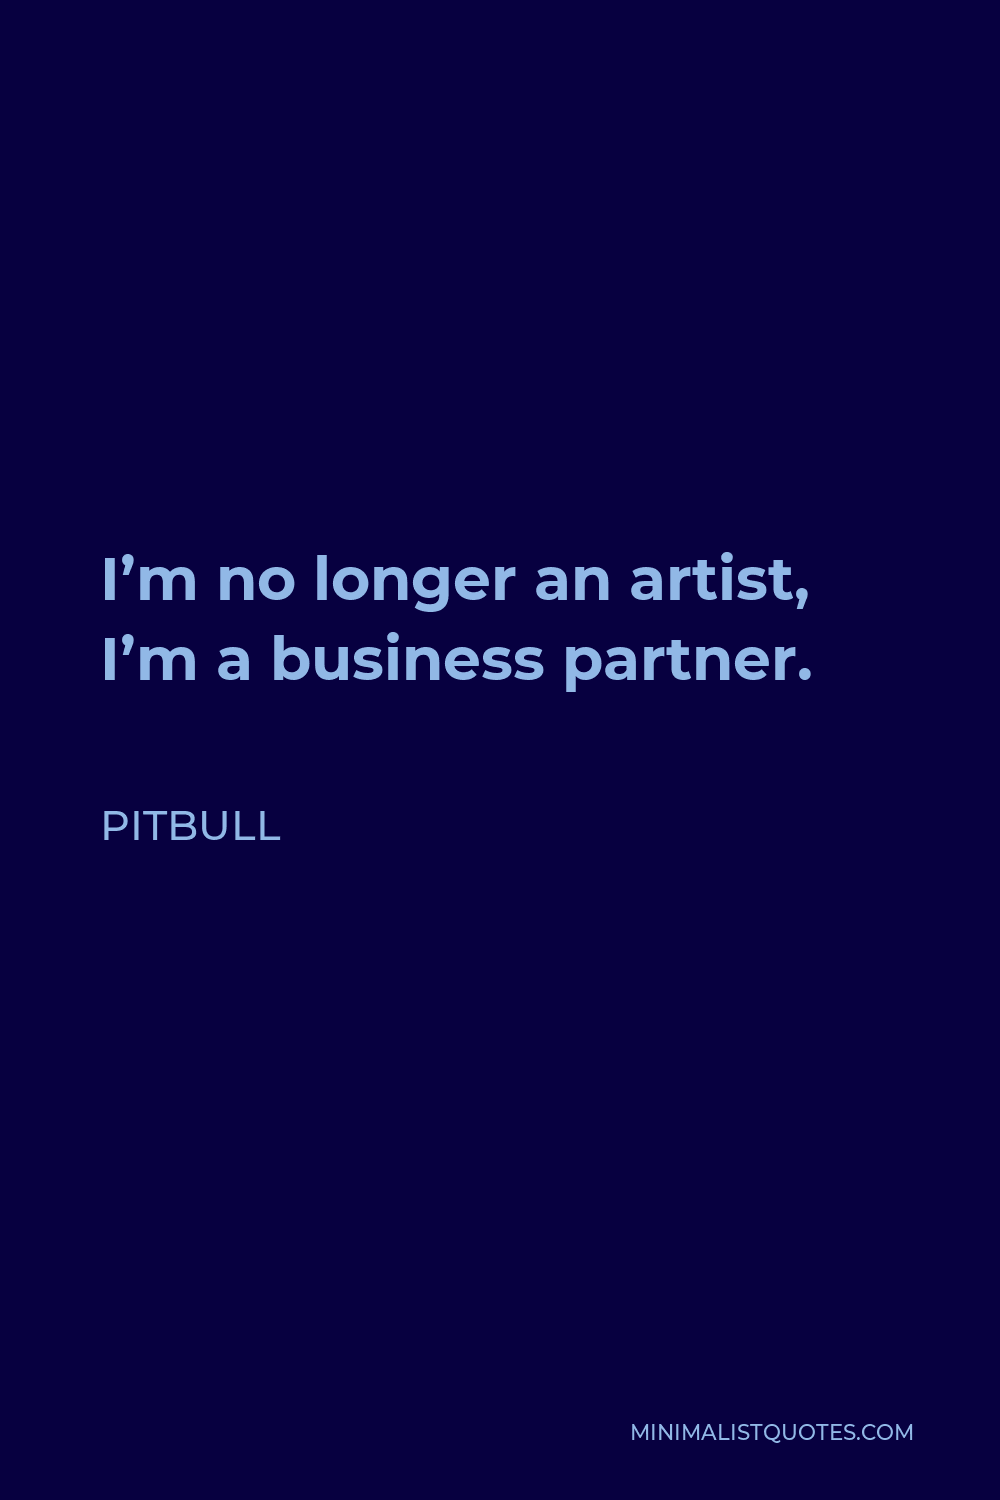 Pitbull Quote - I’m no longer an artist, I’m a business partner.